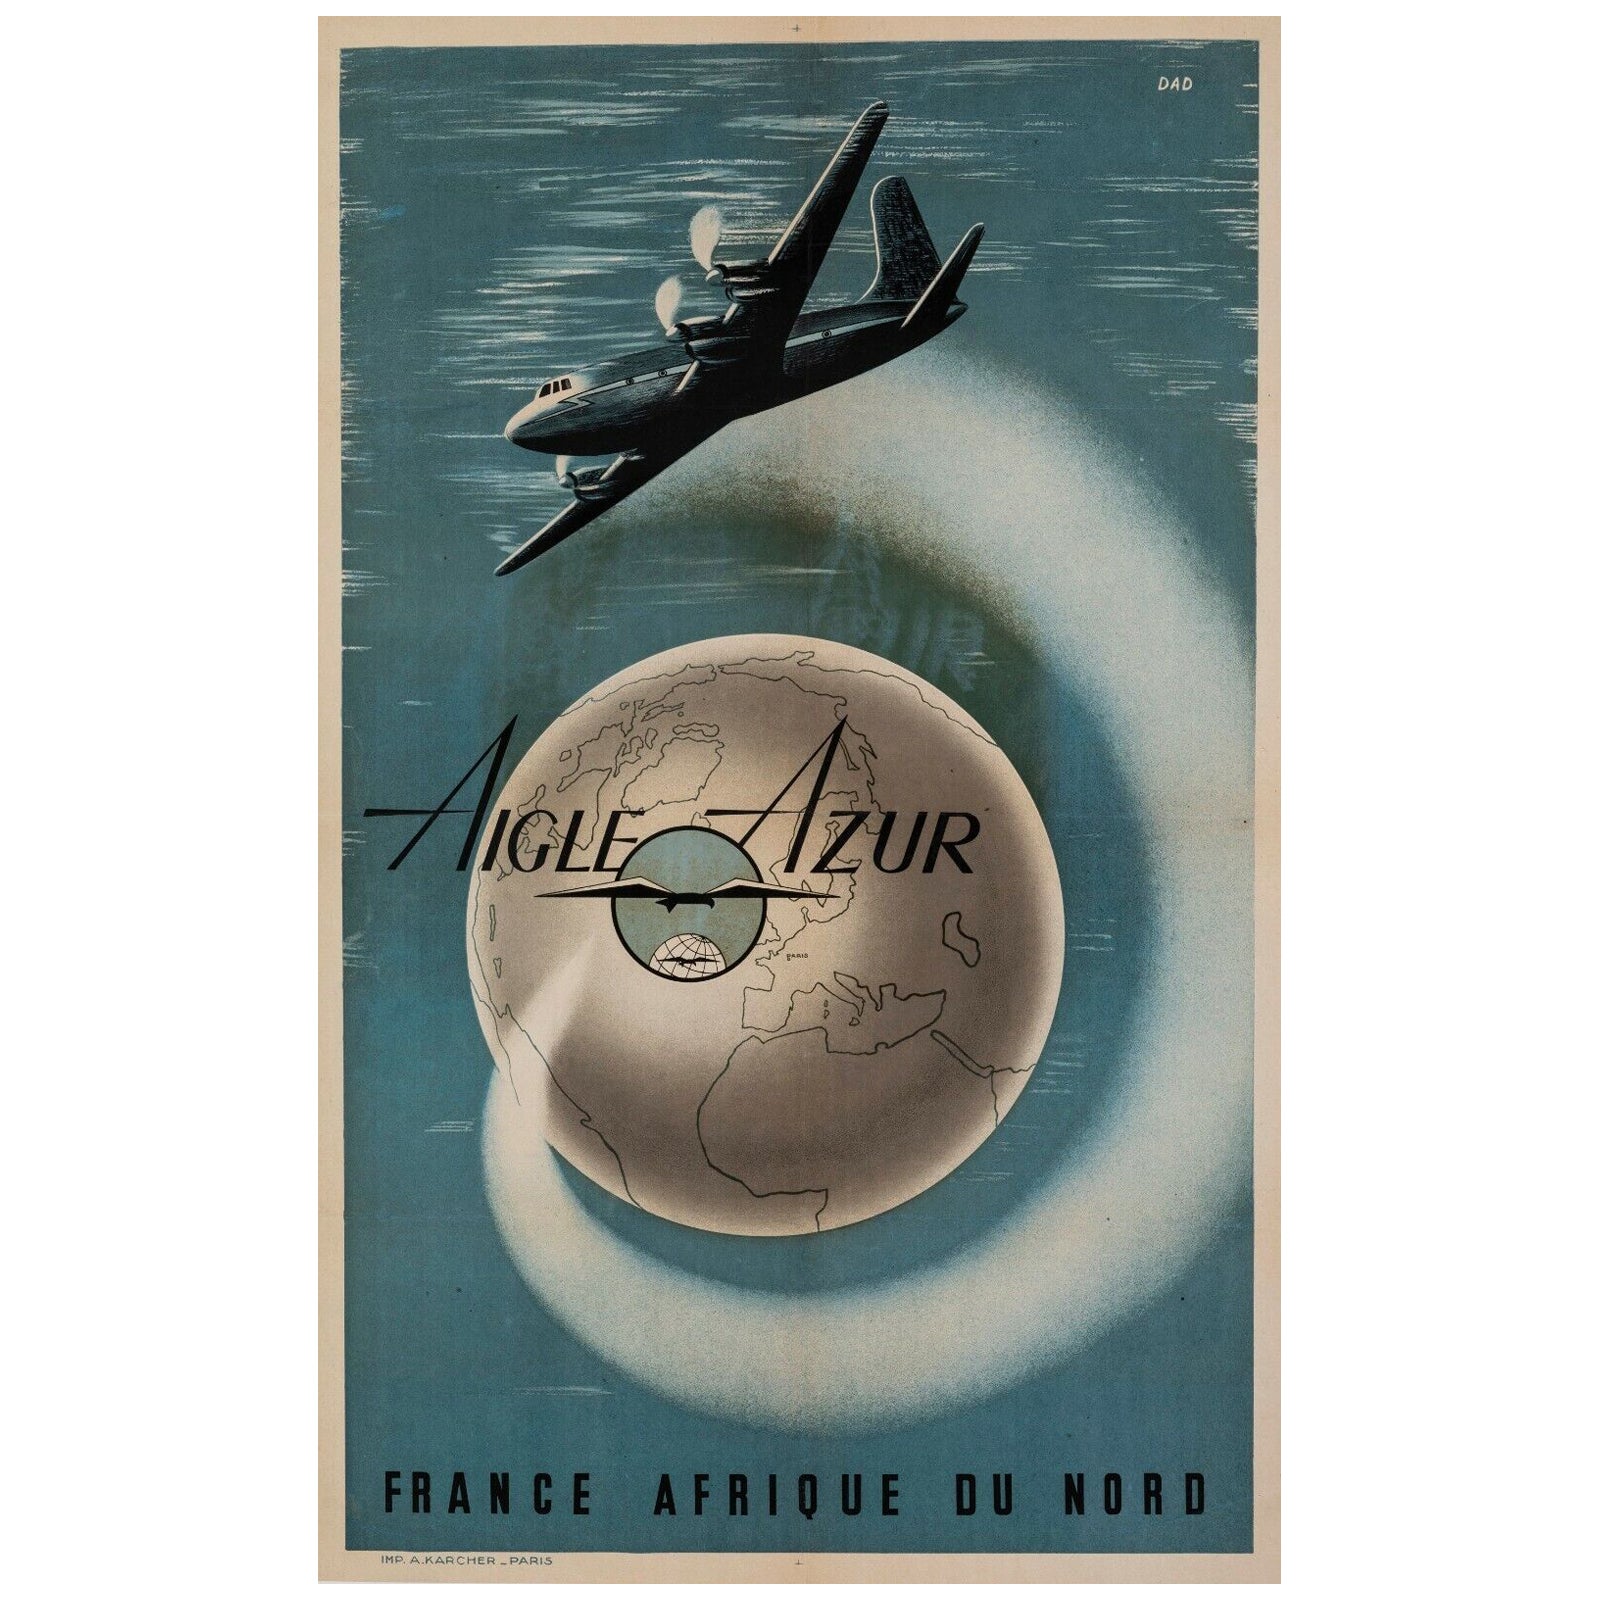 Vintage Airline Poster-Dad-Aigle Azur-France-North Africa Algeria, 1950 For Sale